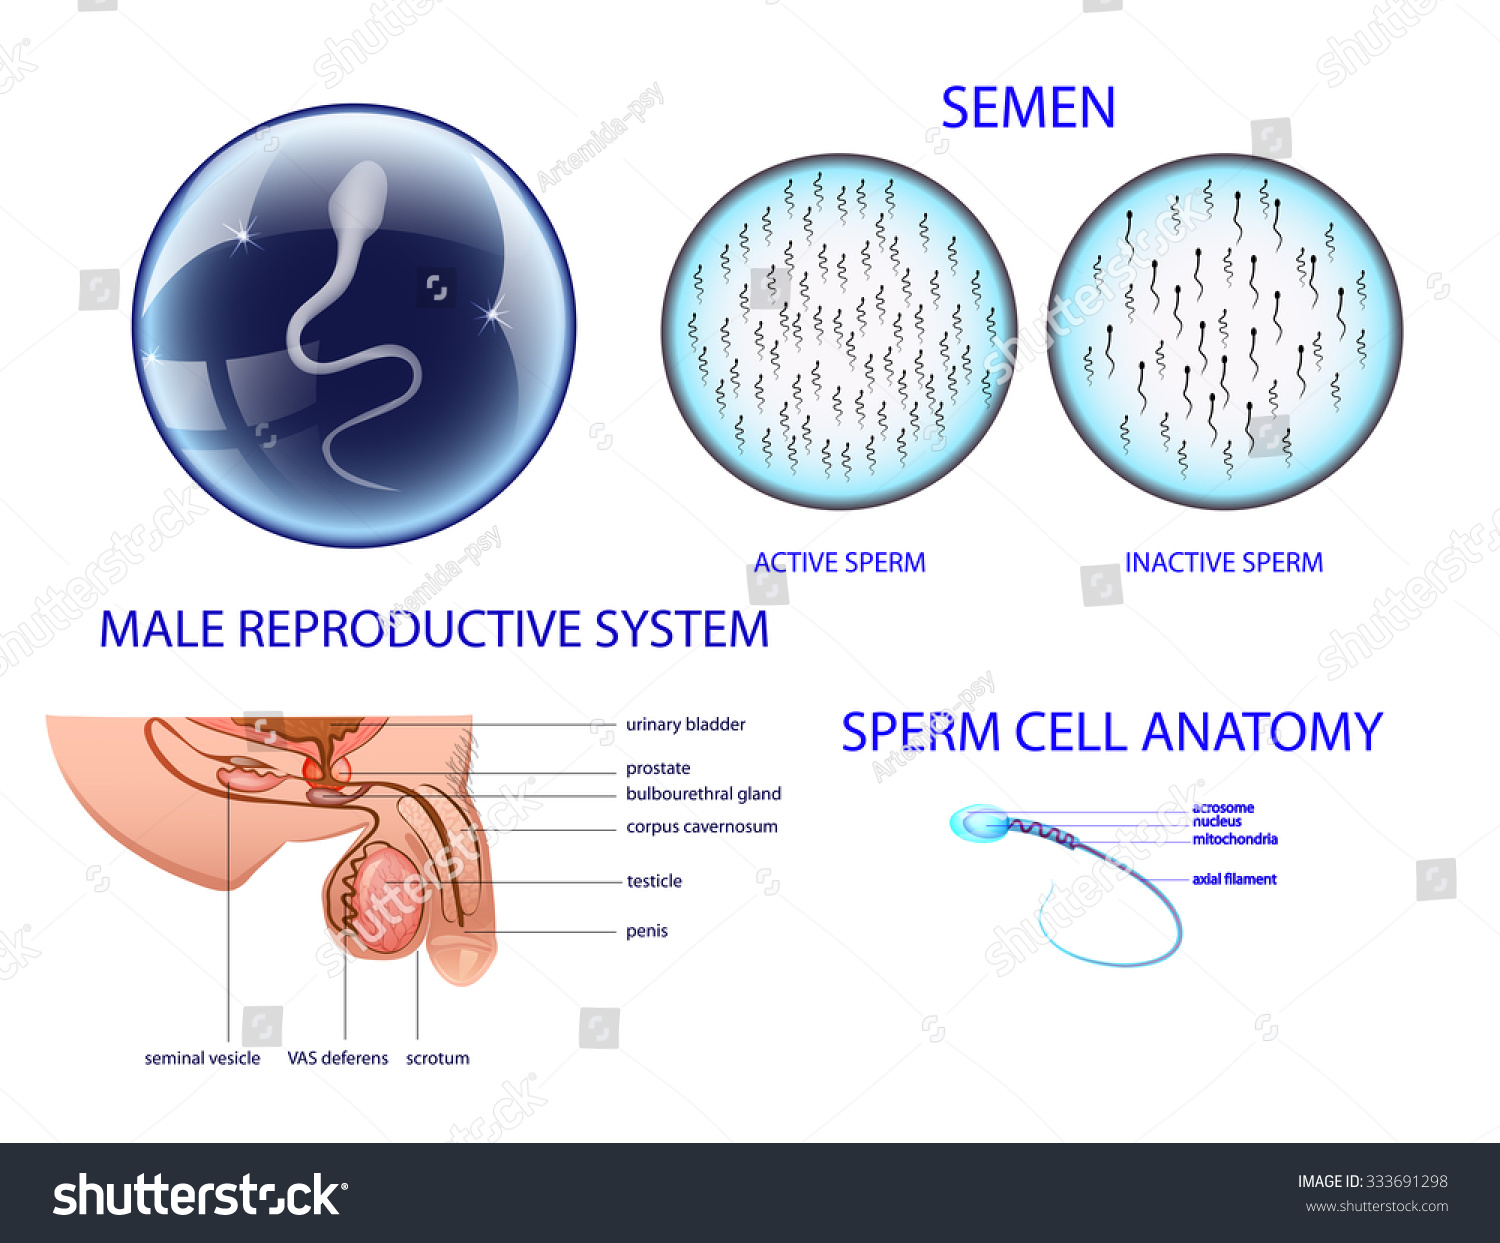 Anatomy Male Reproductive System Semen Stockvector Rechtenvrij 333691298 Shutterstock 1988